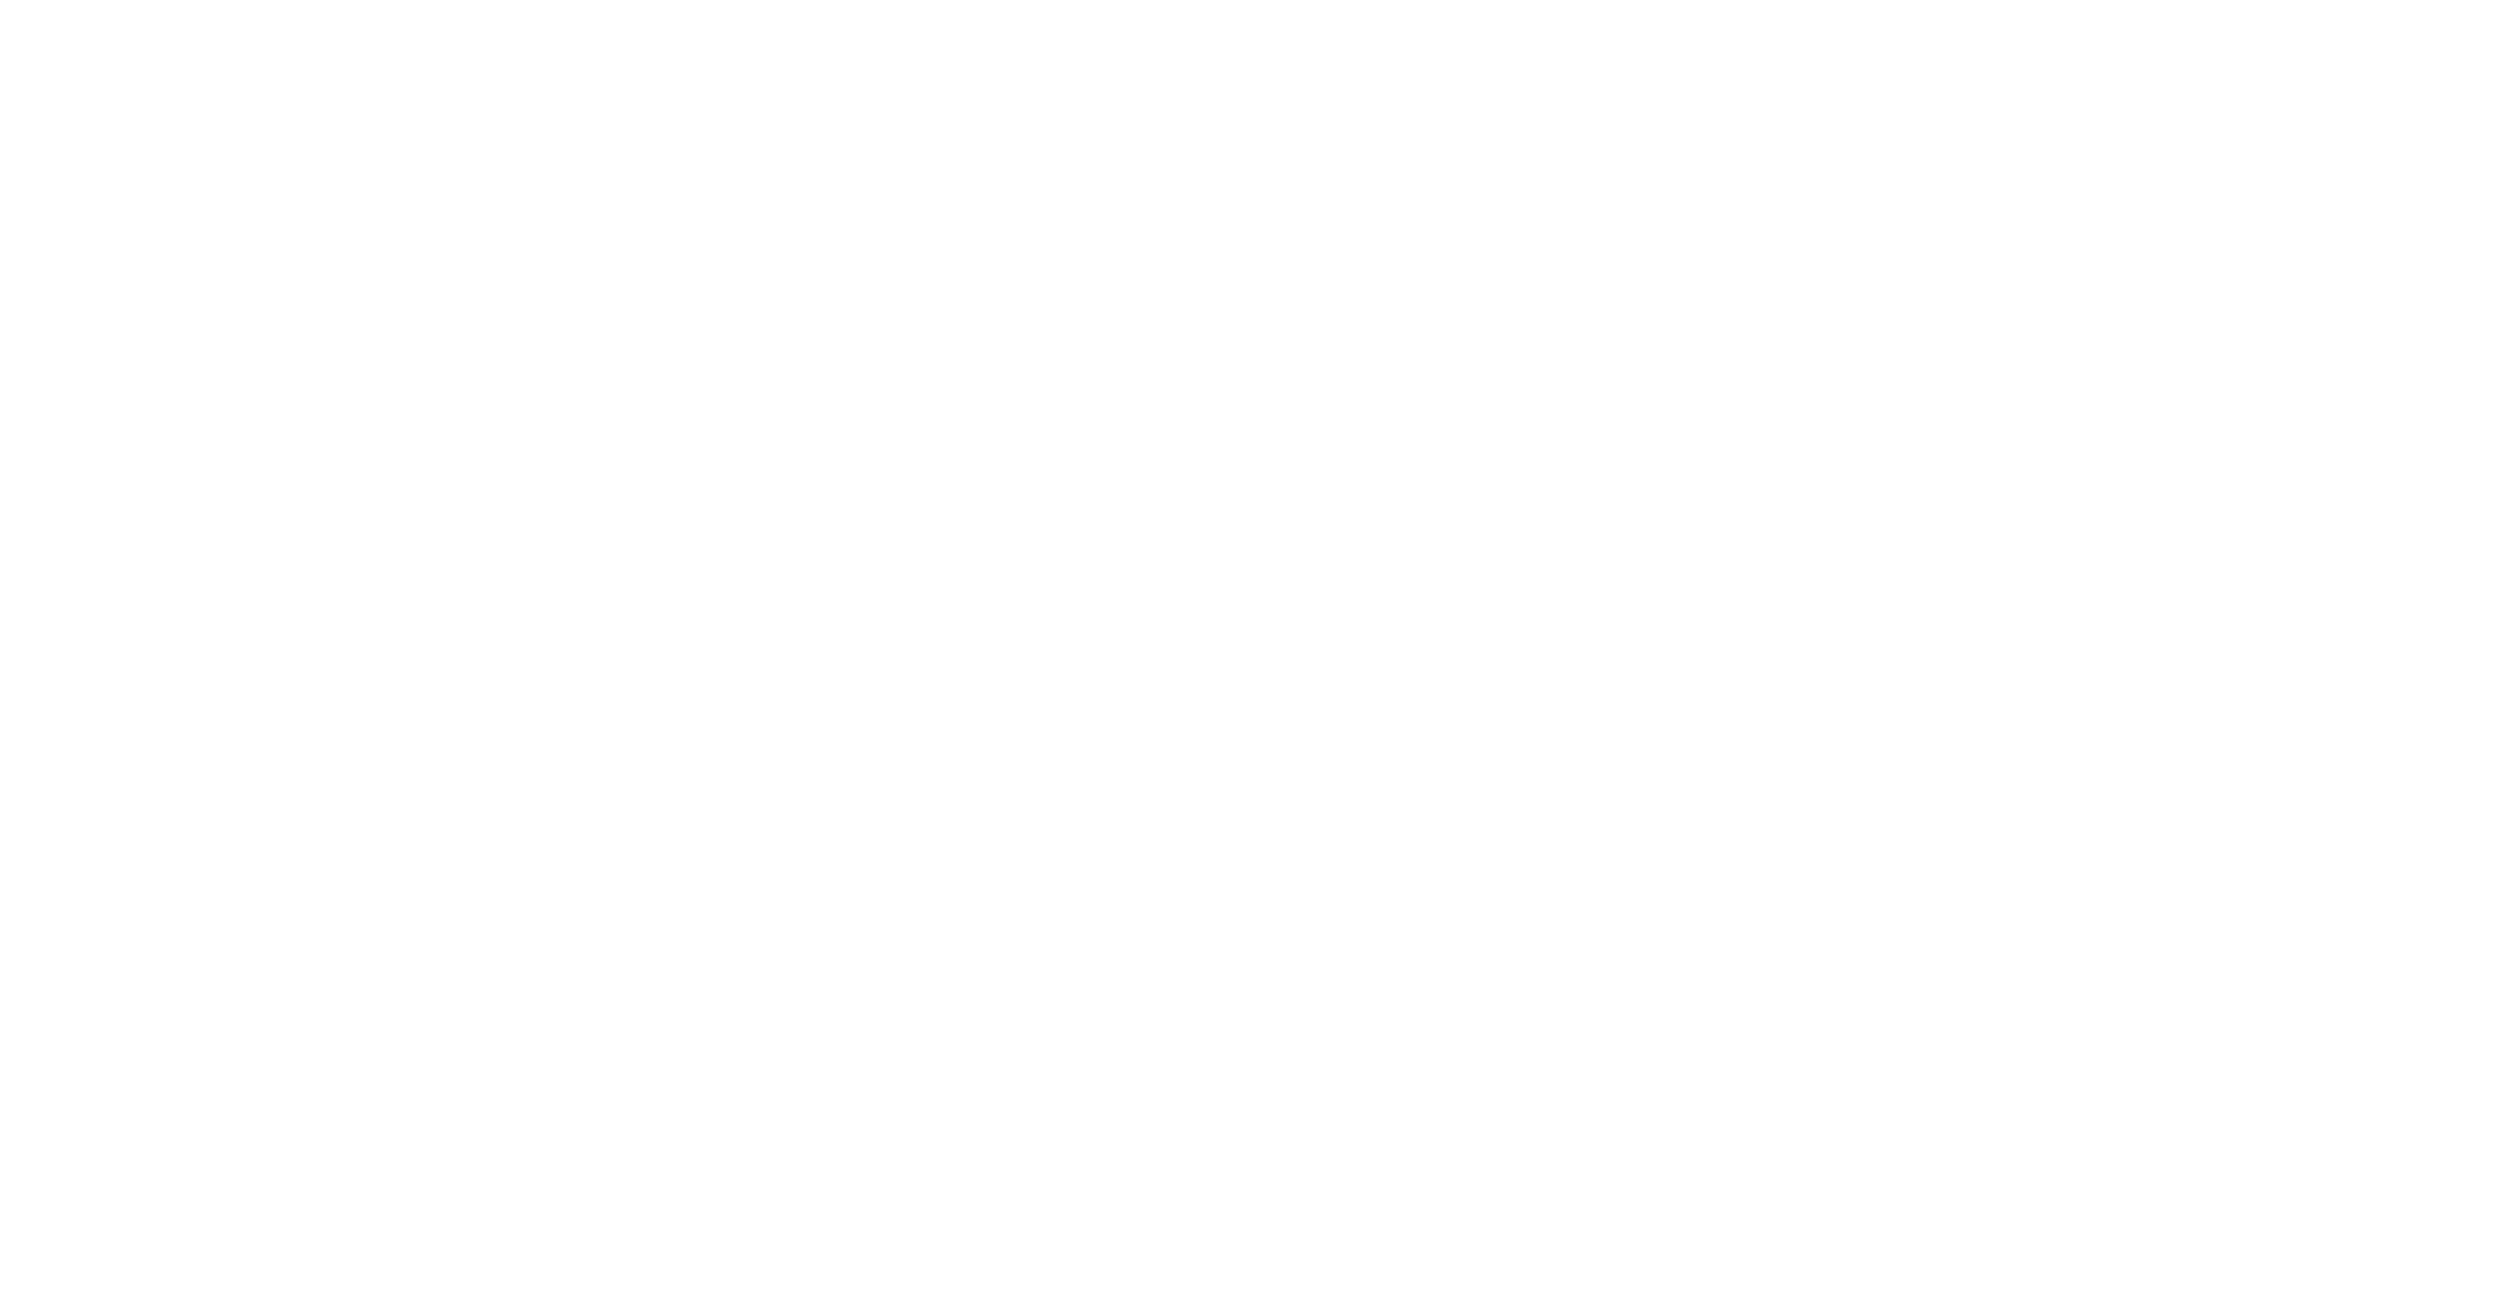 Sports AV Tech Clinic